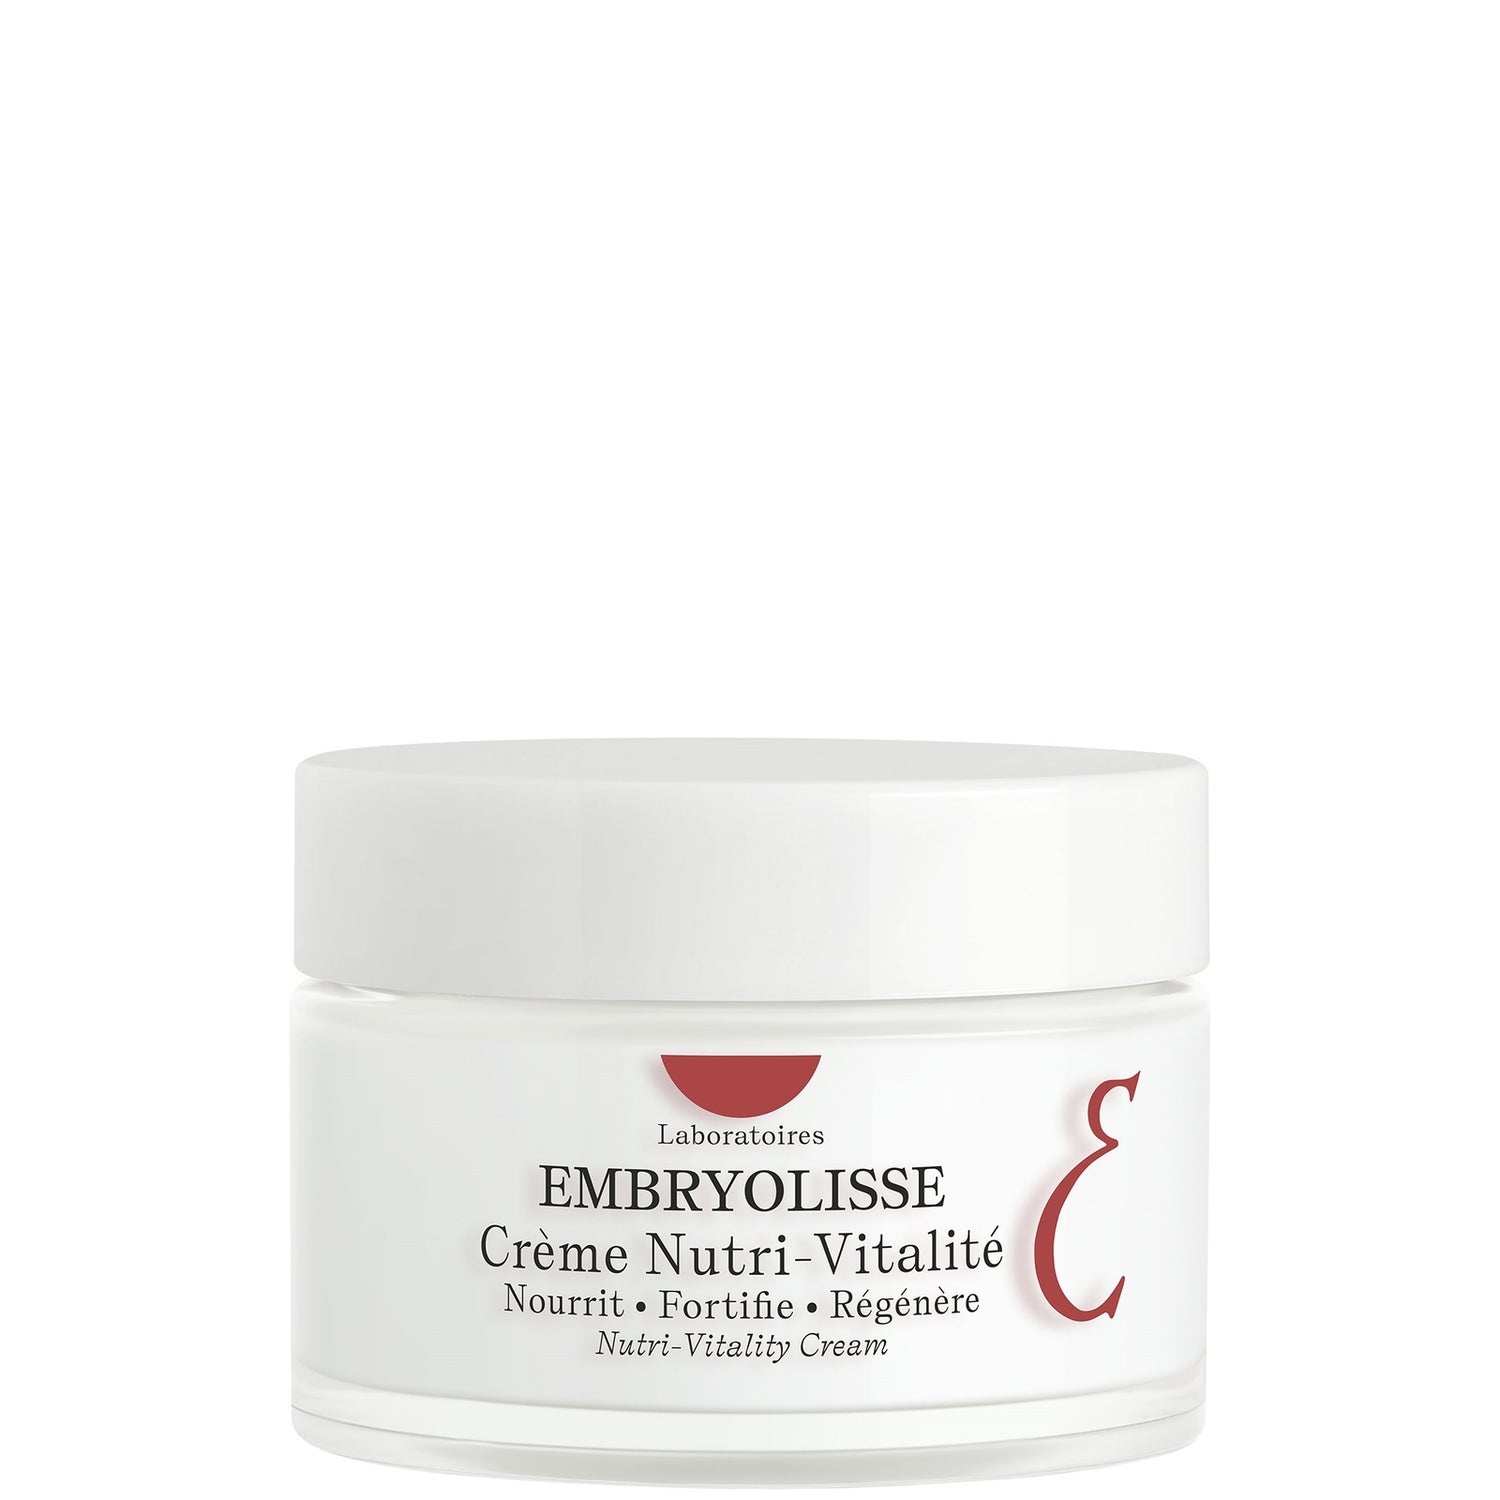 Embryolisse Nutri-Vitality Cream 1.69 fl. oz